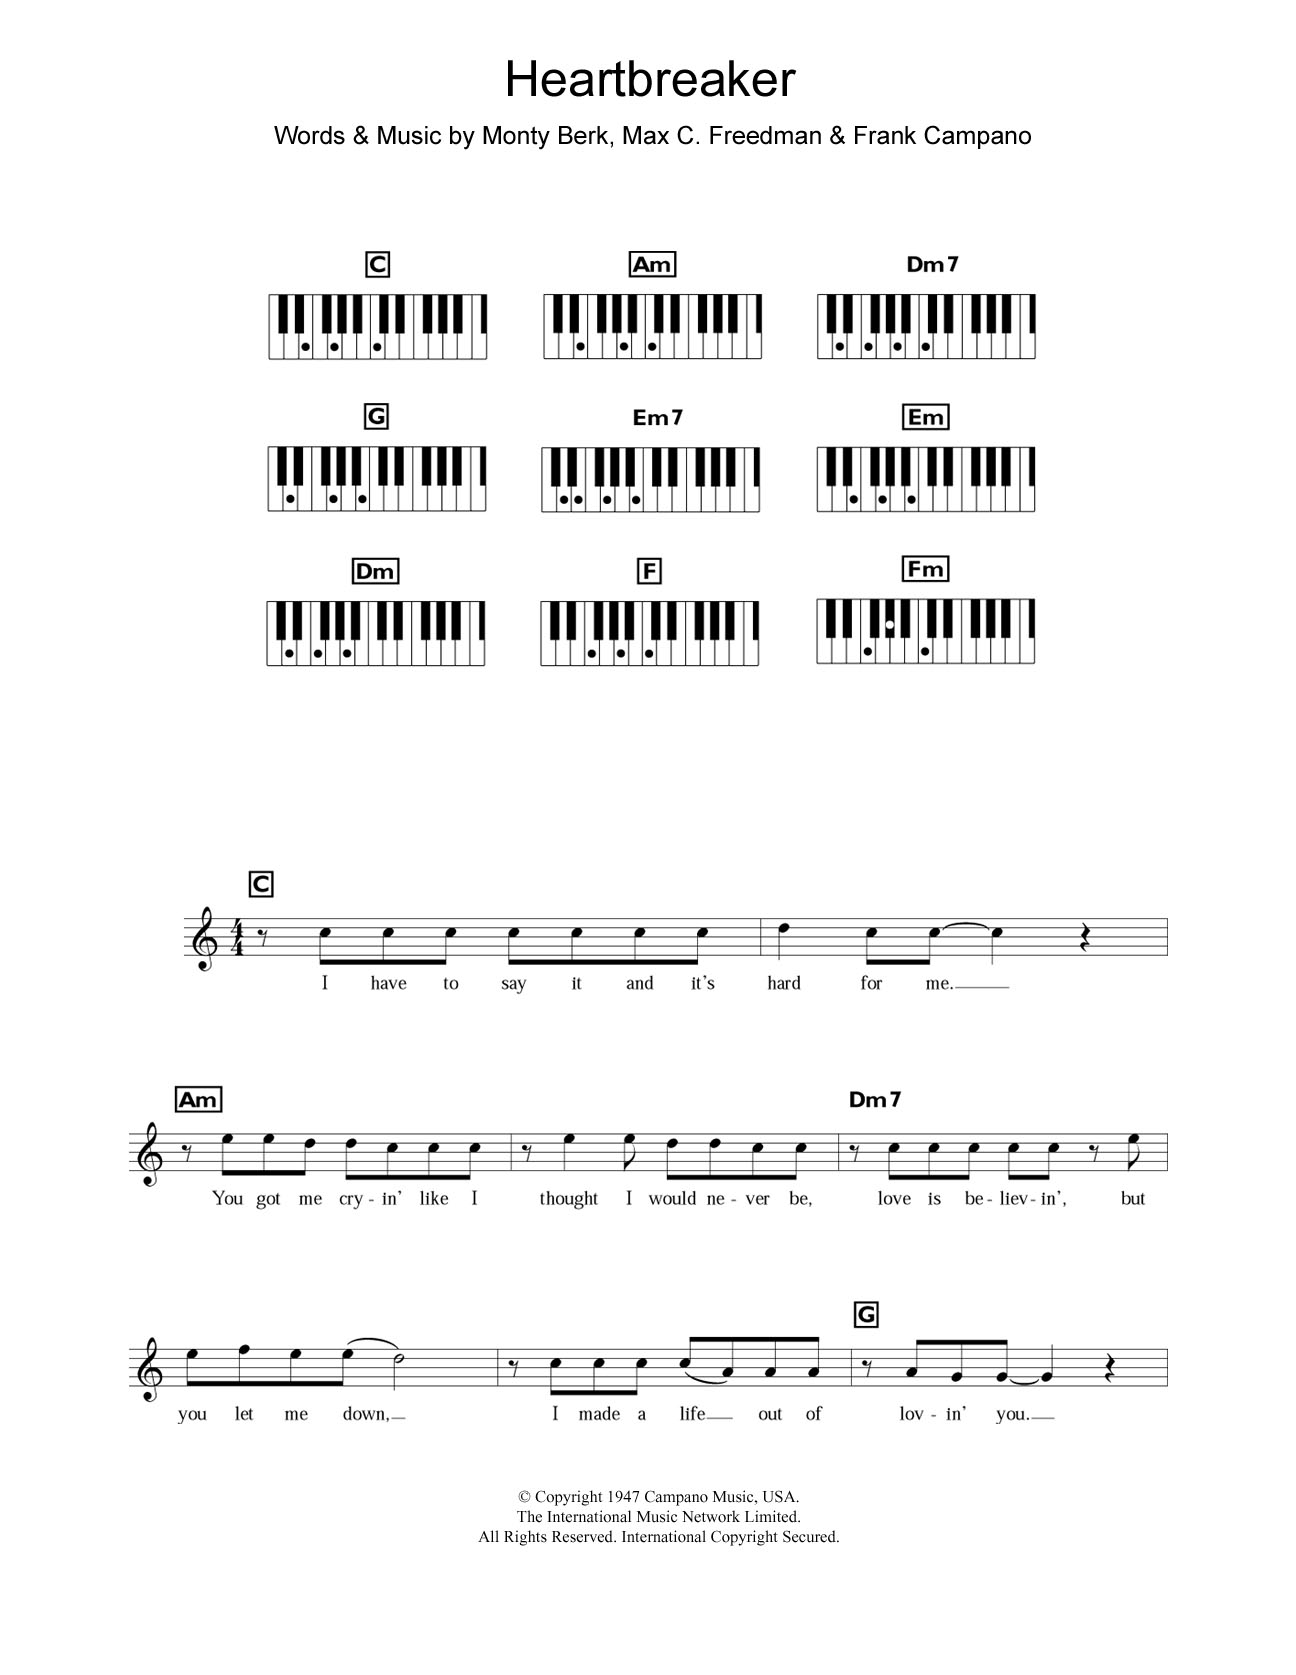 Download Dionne Warwick Heartbreaker Sheet Music and learn how to play Keyboard PDF digital score in minutes